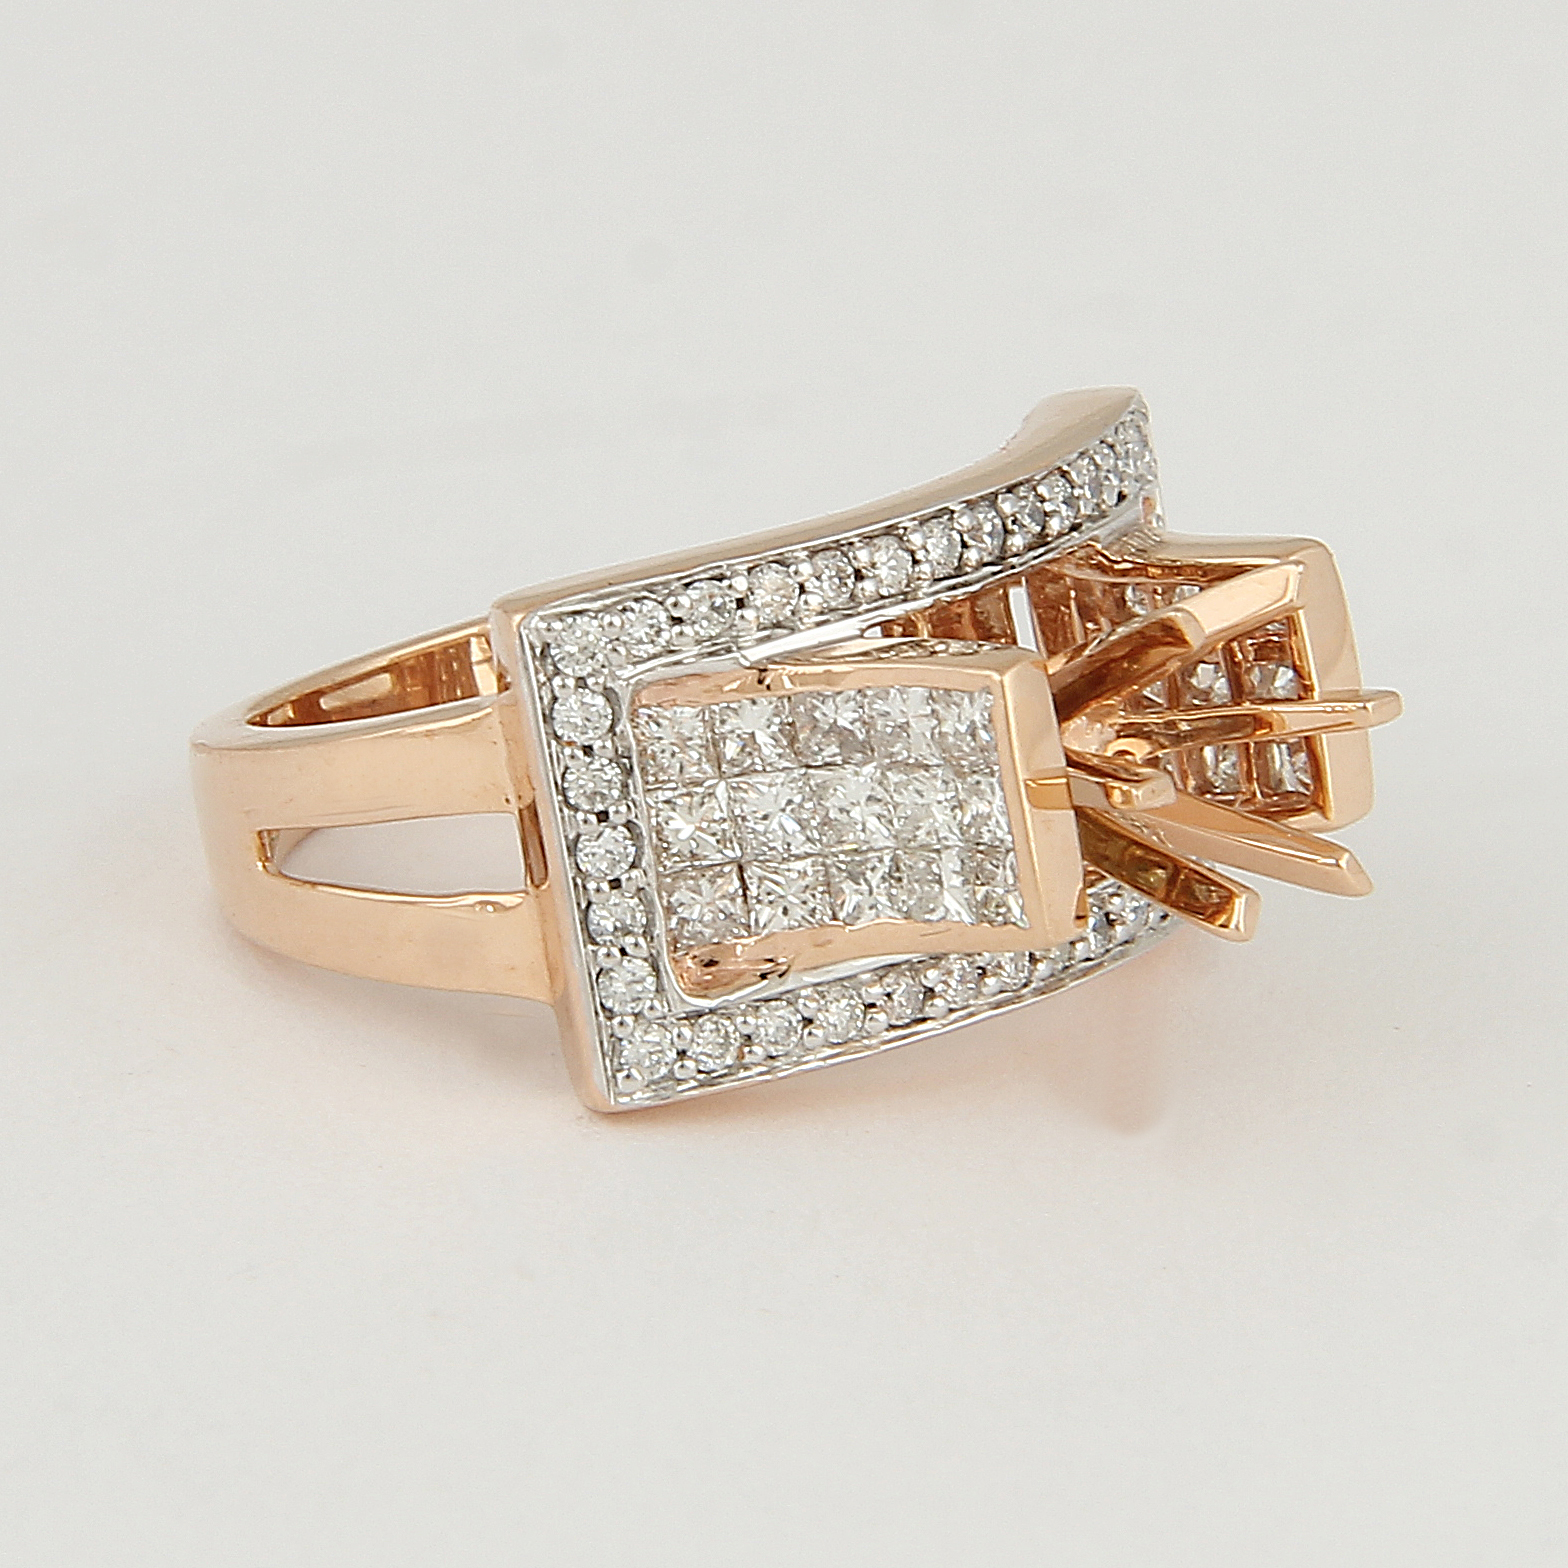 IGI Certified 14 K / 585 Rose Gold Diamond Ring - Centre Stone Unmounted - Image 3 of 6